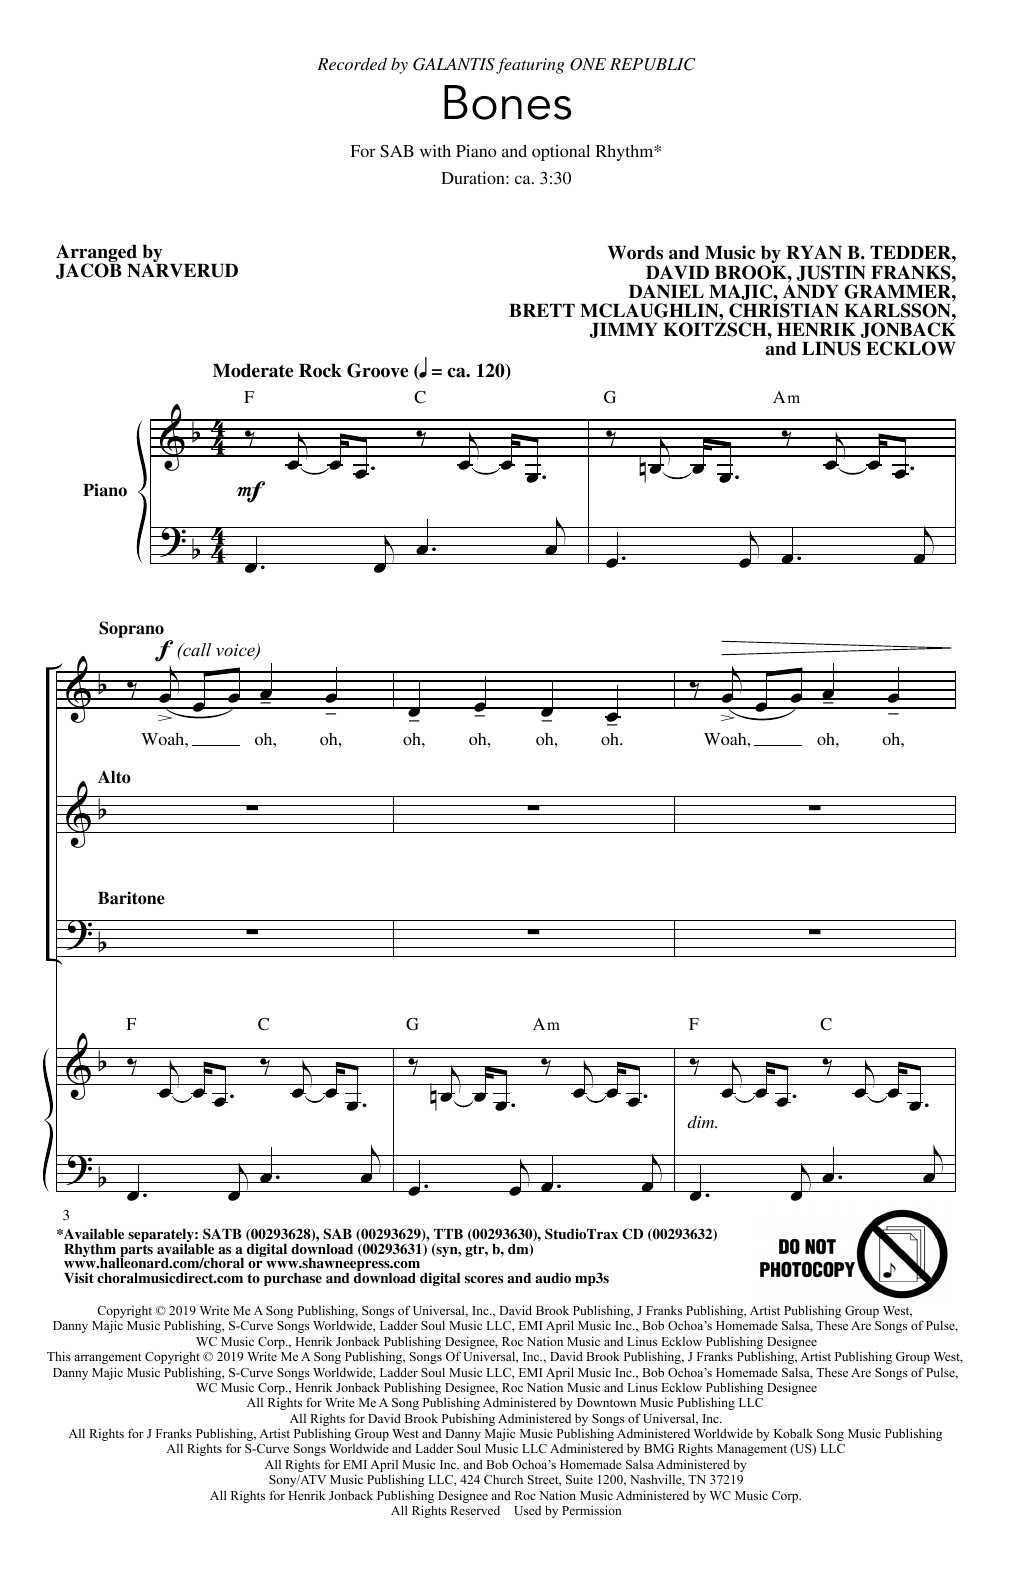 Galantis Bones (feat. OneRepublic) (arr. Jacob Narverud) Sheet Music Notes & Chords for TTBB Choir - Download or Print PDF